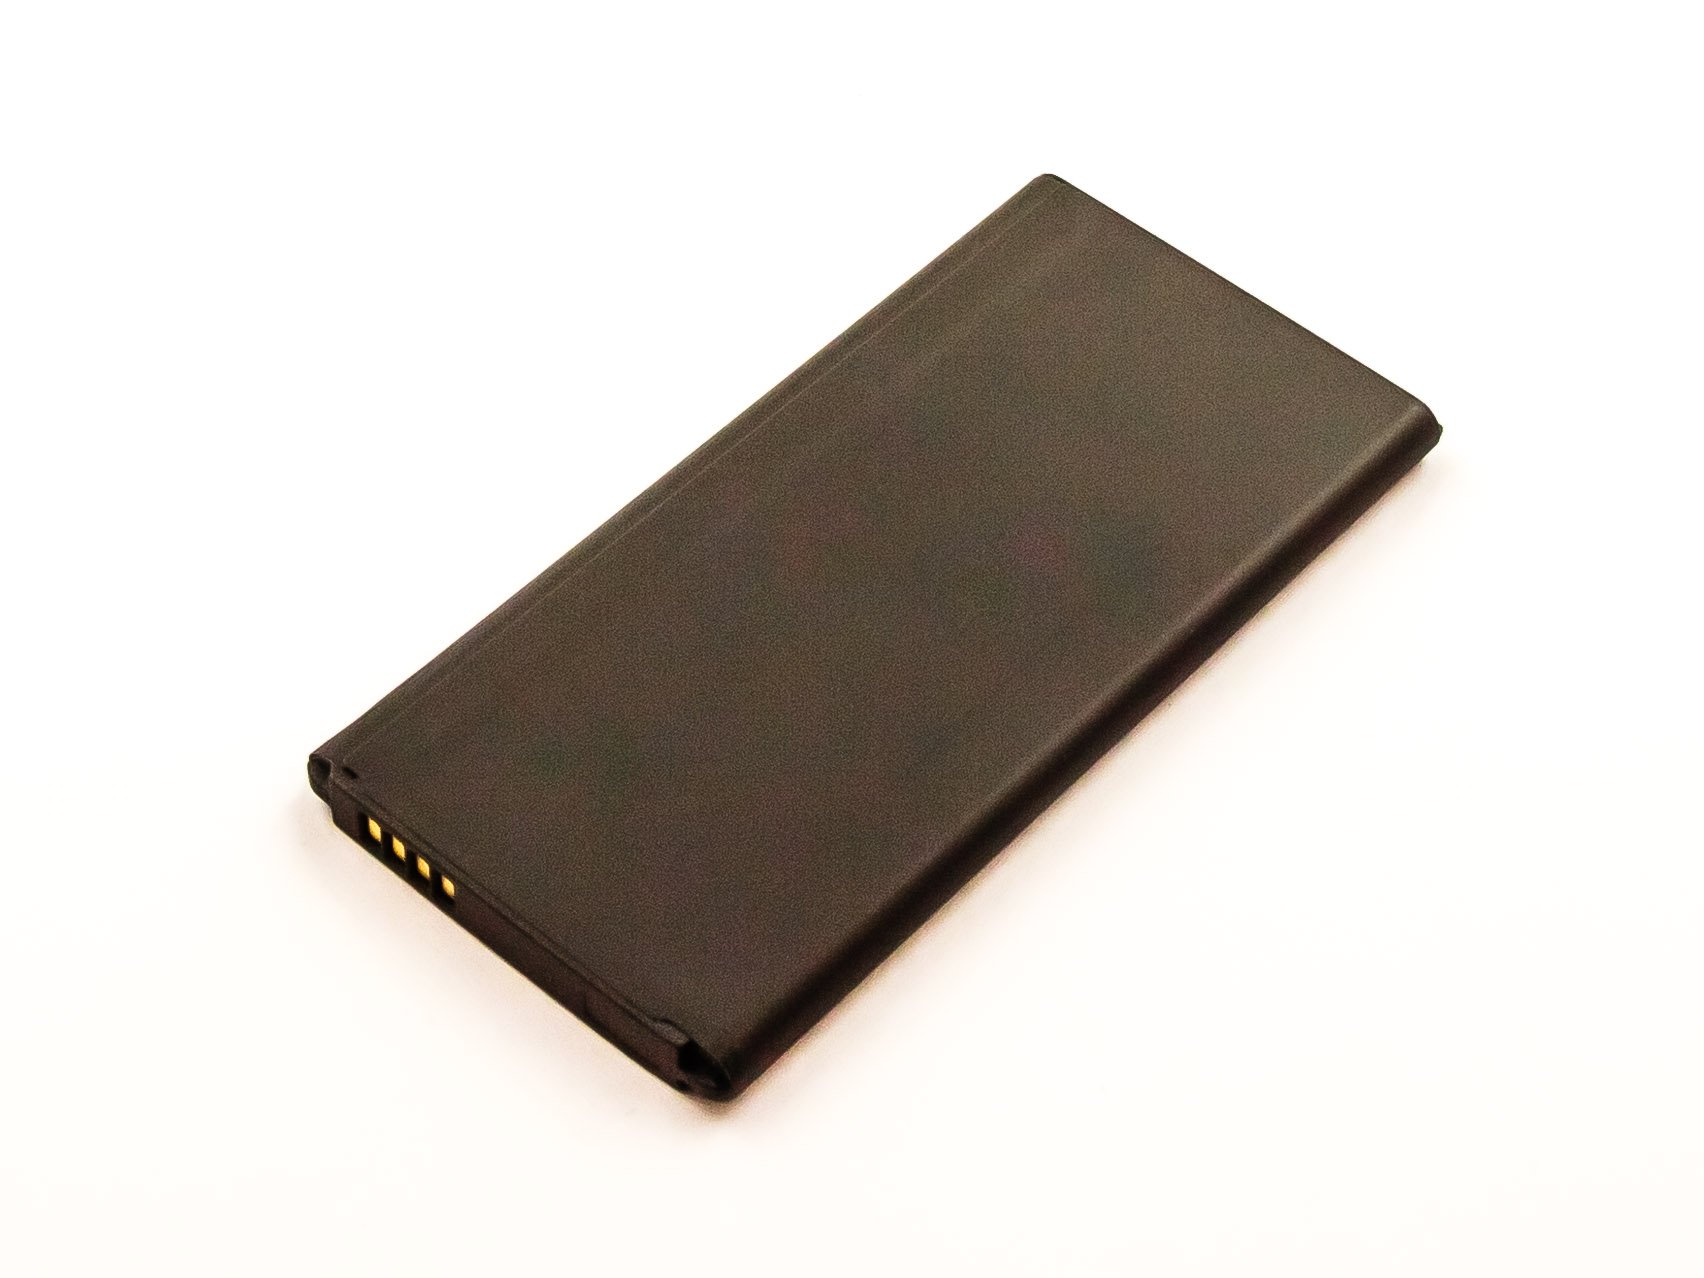 AGI Akku kompatibel mit 3.85 2800 Volt, mAh Li-Ion Samsung SM-G900 Handy-/Smartphoneakku